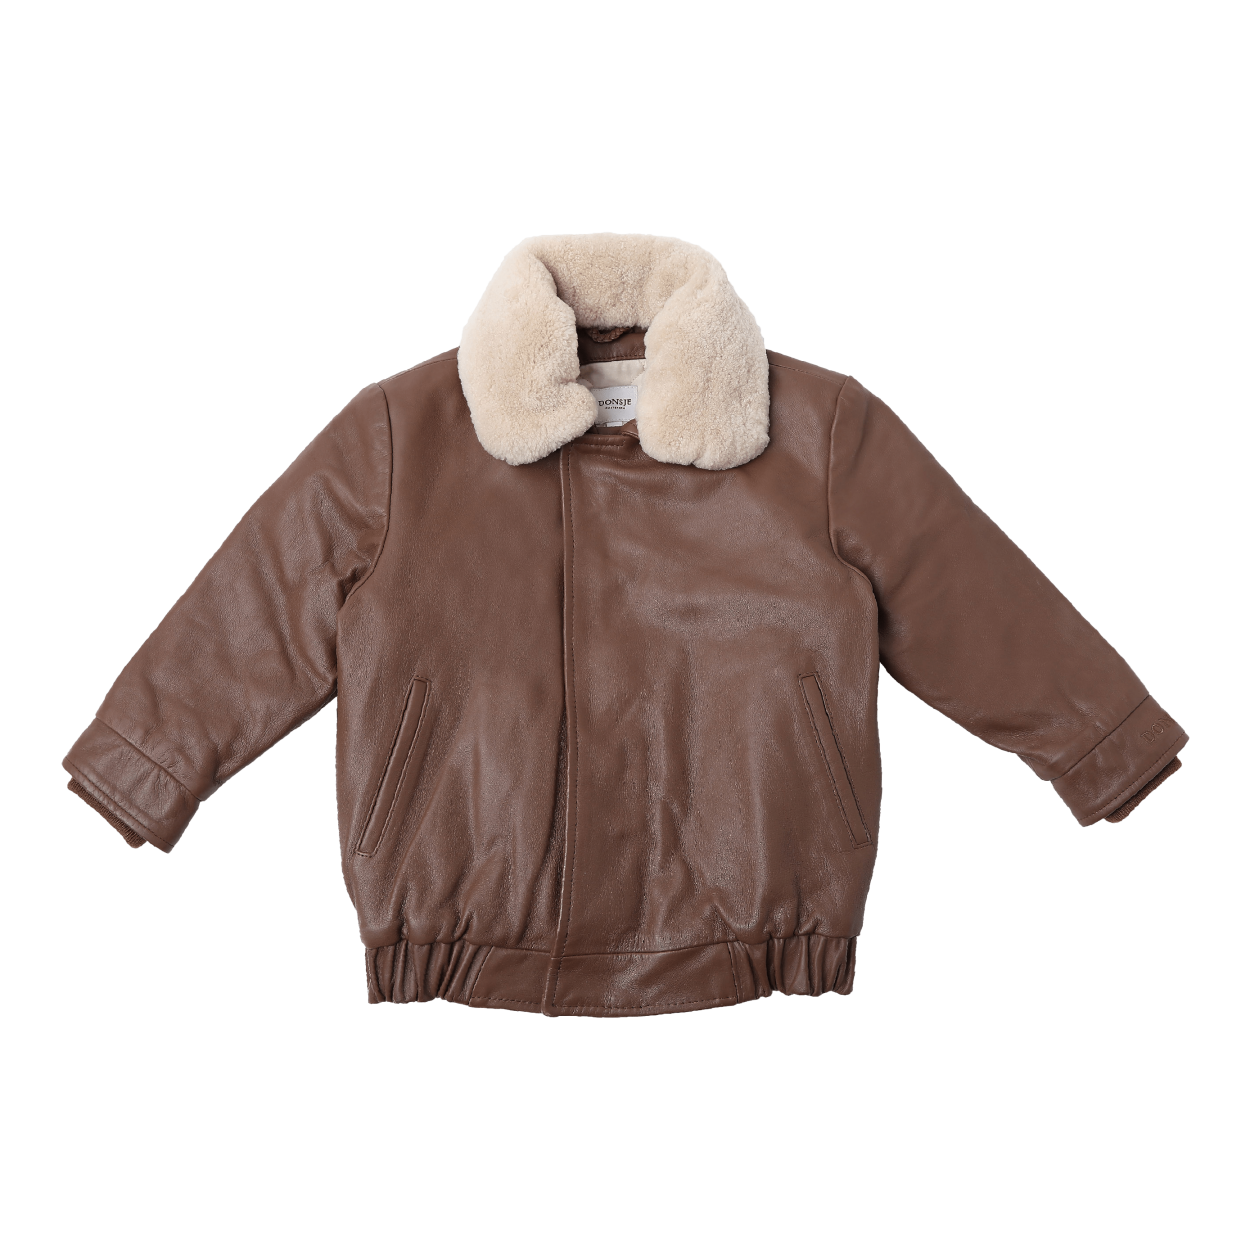 Yuki Leather Jacket | Bear | Cognac Leather